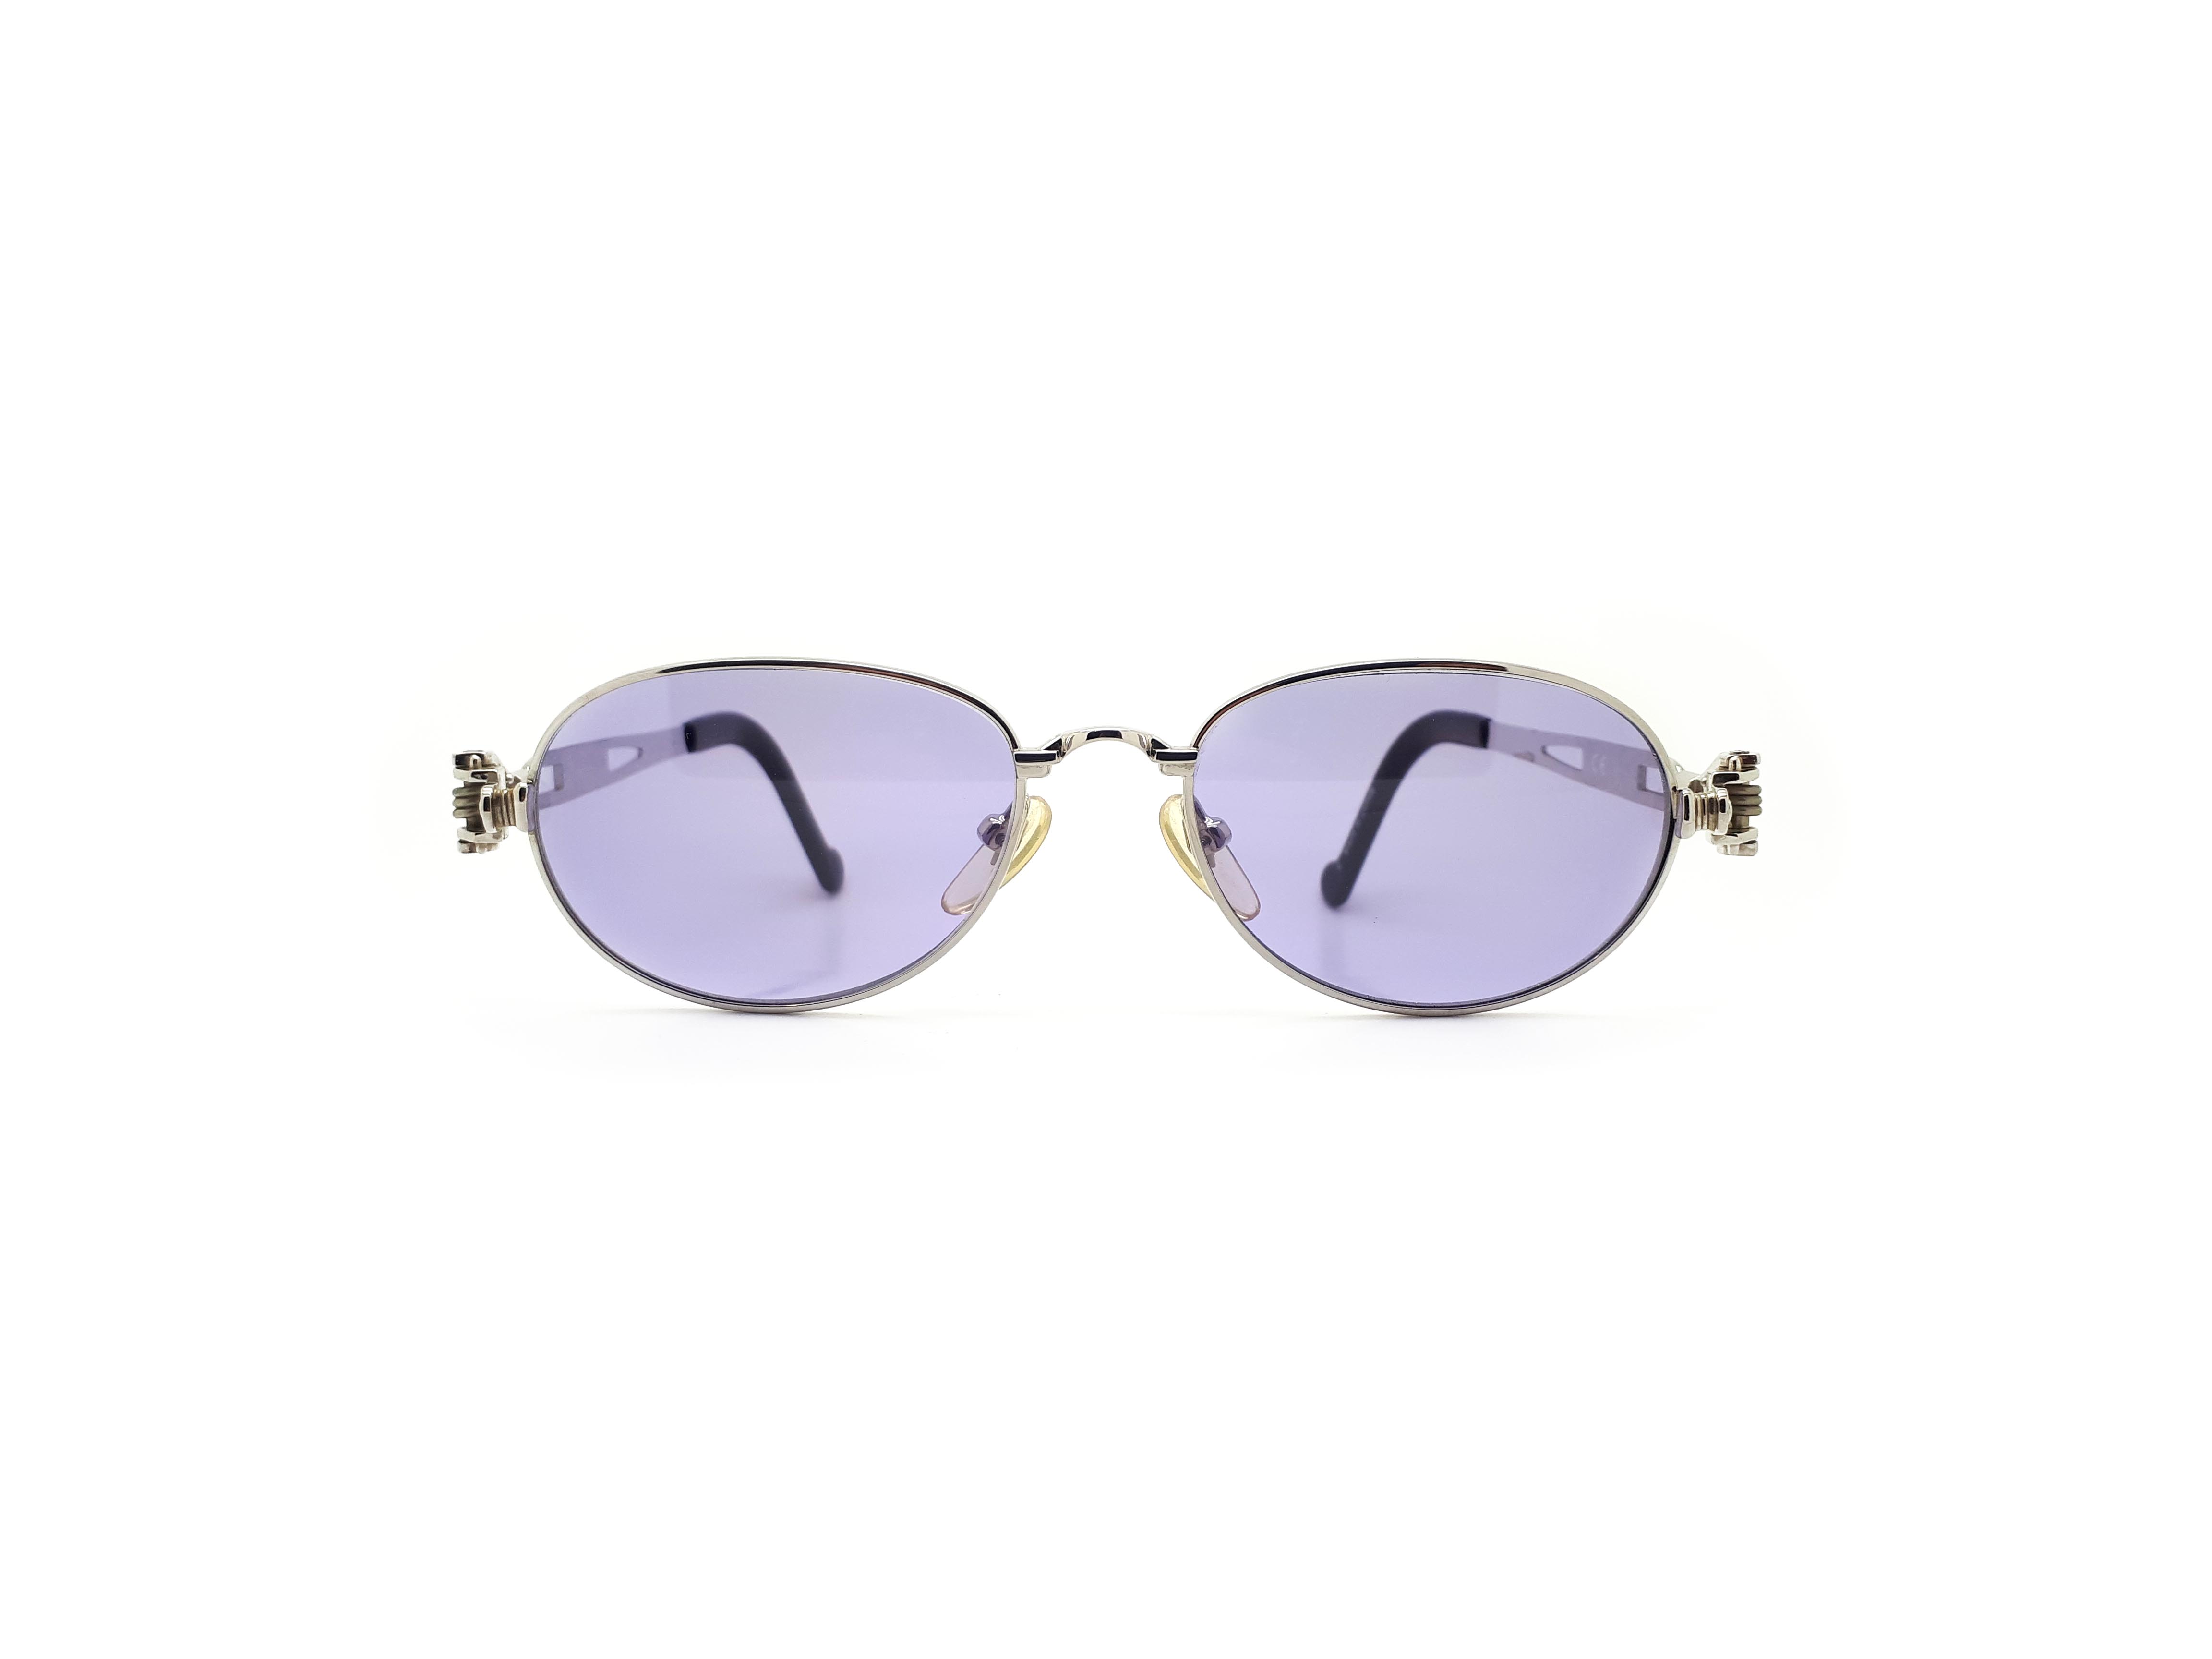 Ysl.sunglasses 1970s Purple Oversized Rare 